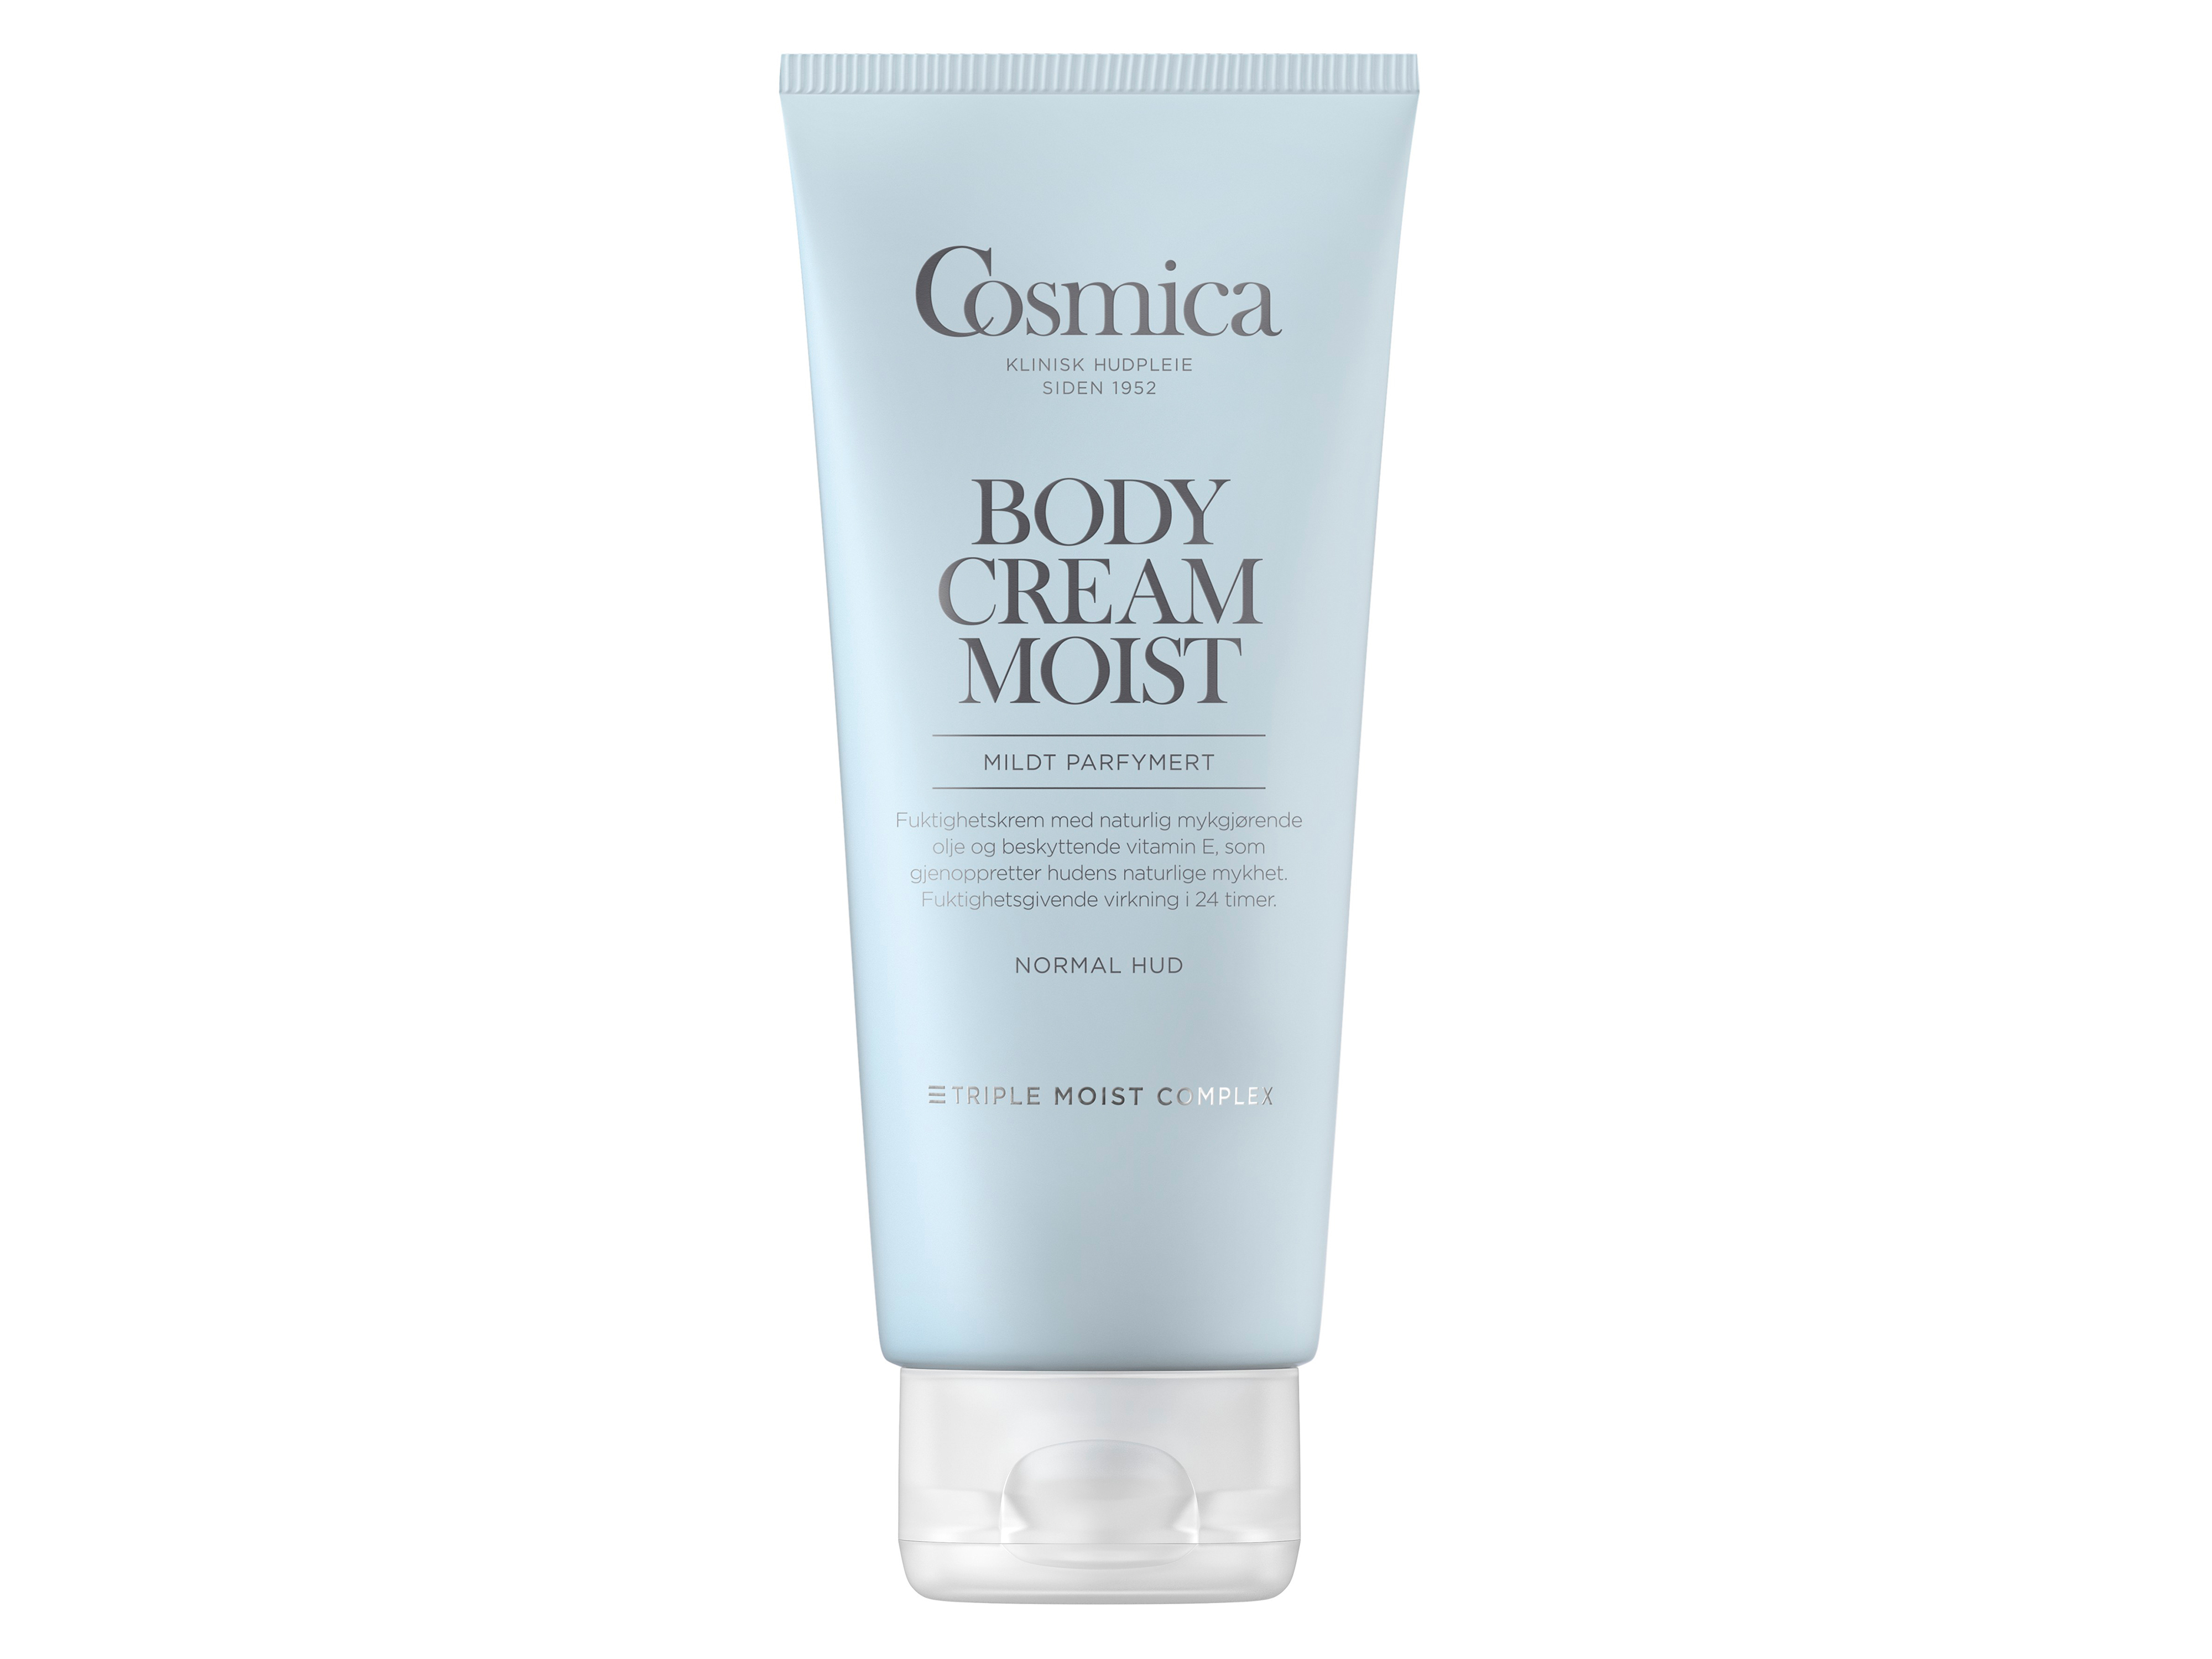 Cosmica Body Cream Moist m/p, 200 ml